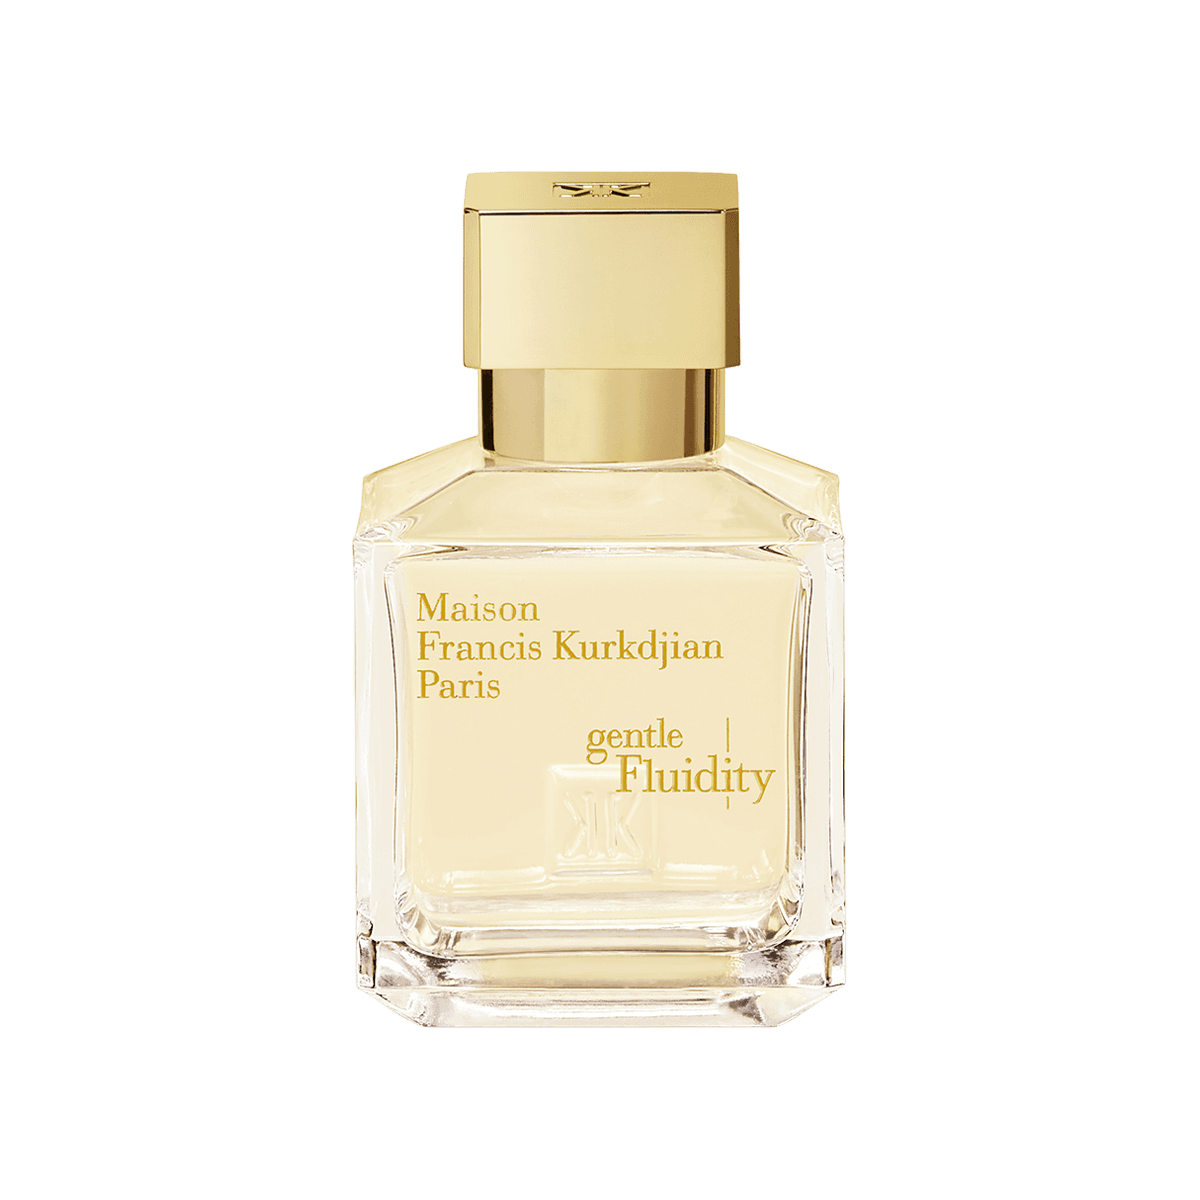 Maison Francis Kurkdjian Gentle Fluidity Eau De Parfum Samples